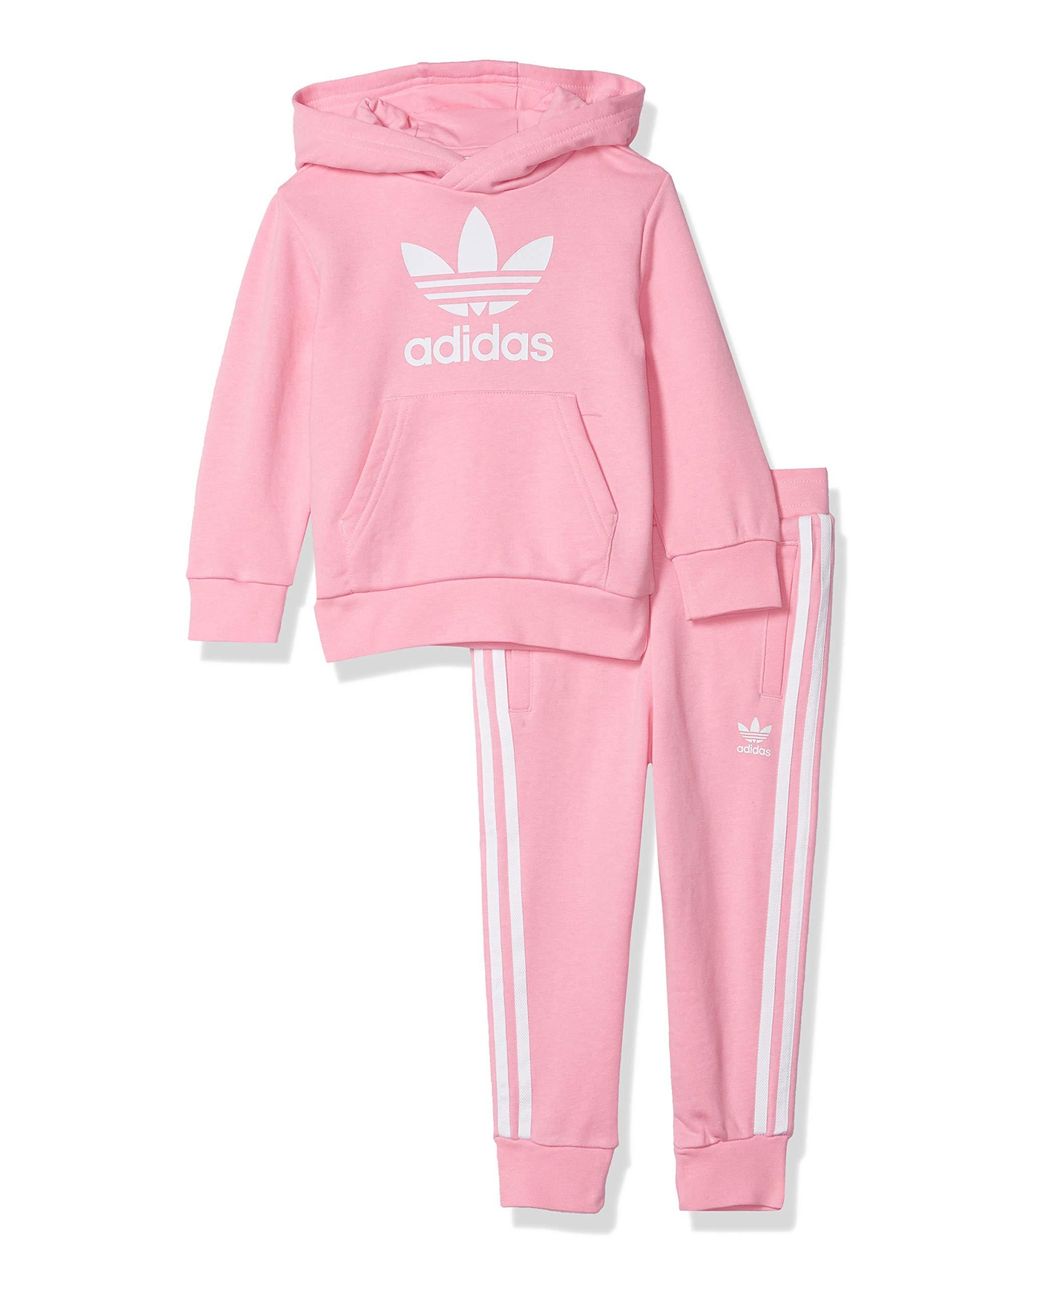 adidas Originals Unisex-youth Trefoil Hoodie Set Light Pink/white Large ...